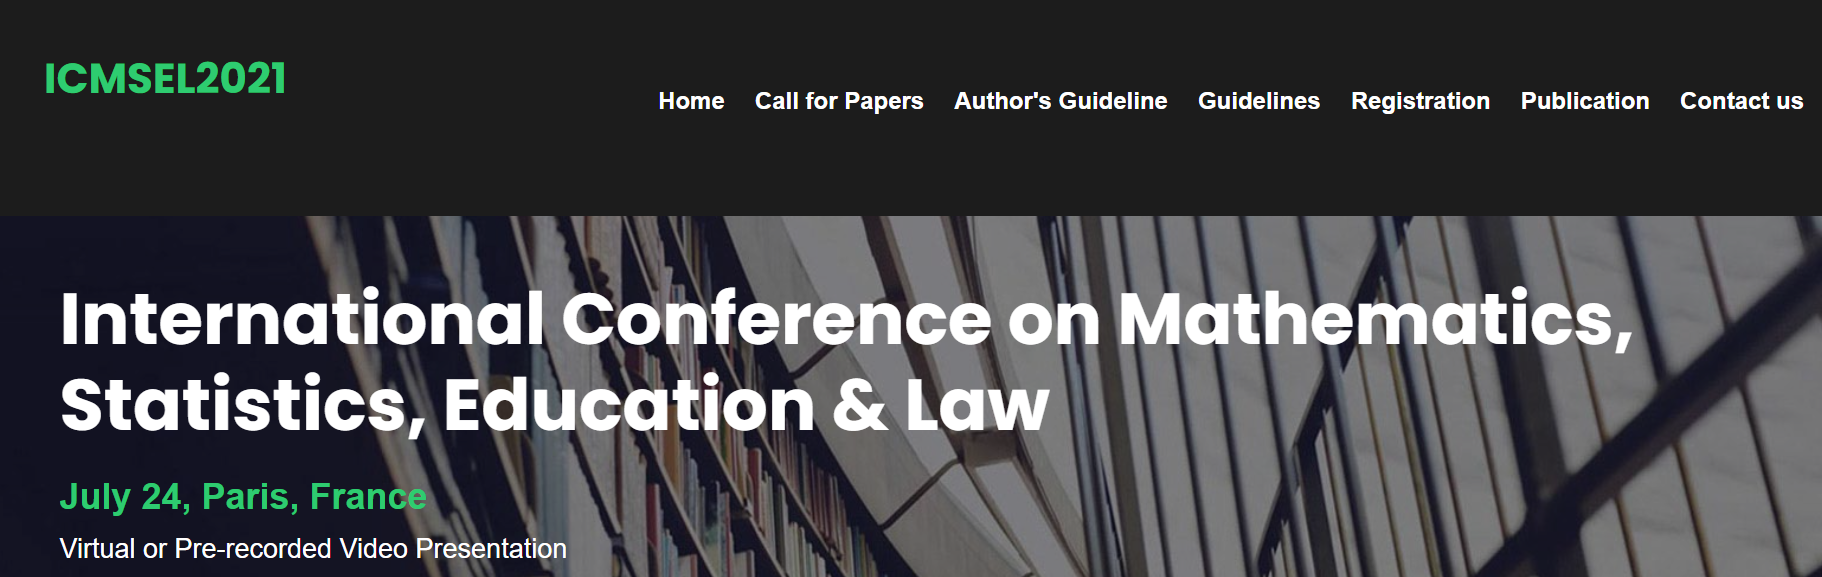 International Conference on Mathematics, Statistics, Education & Law, Paris, France,Paris,France